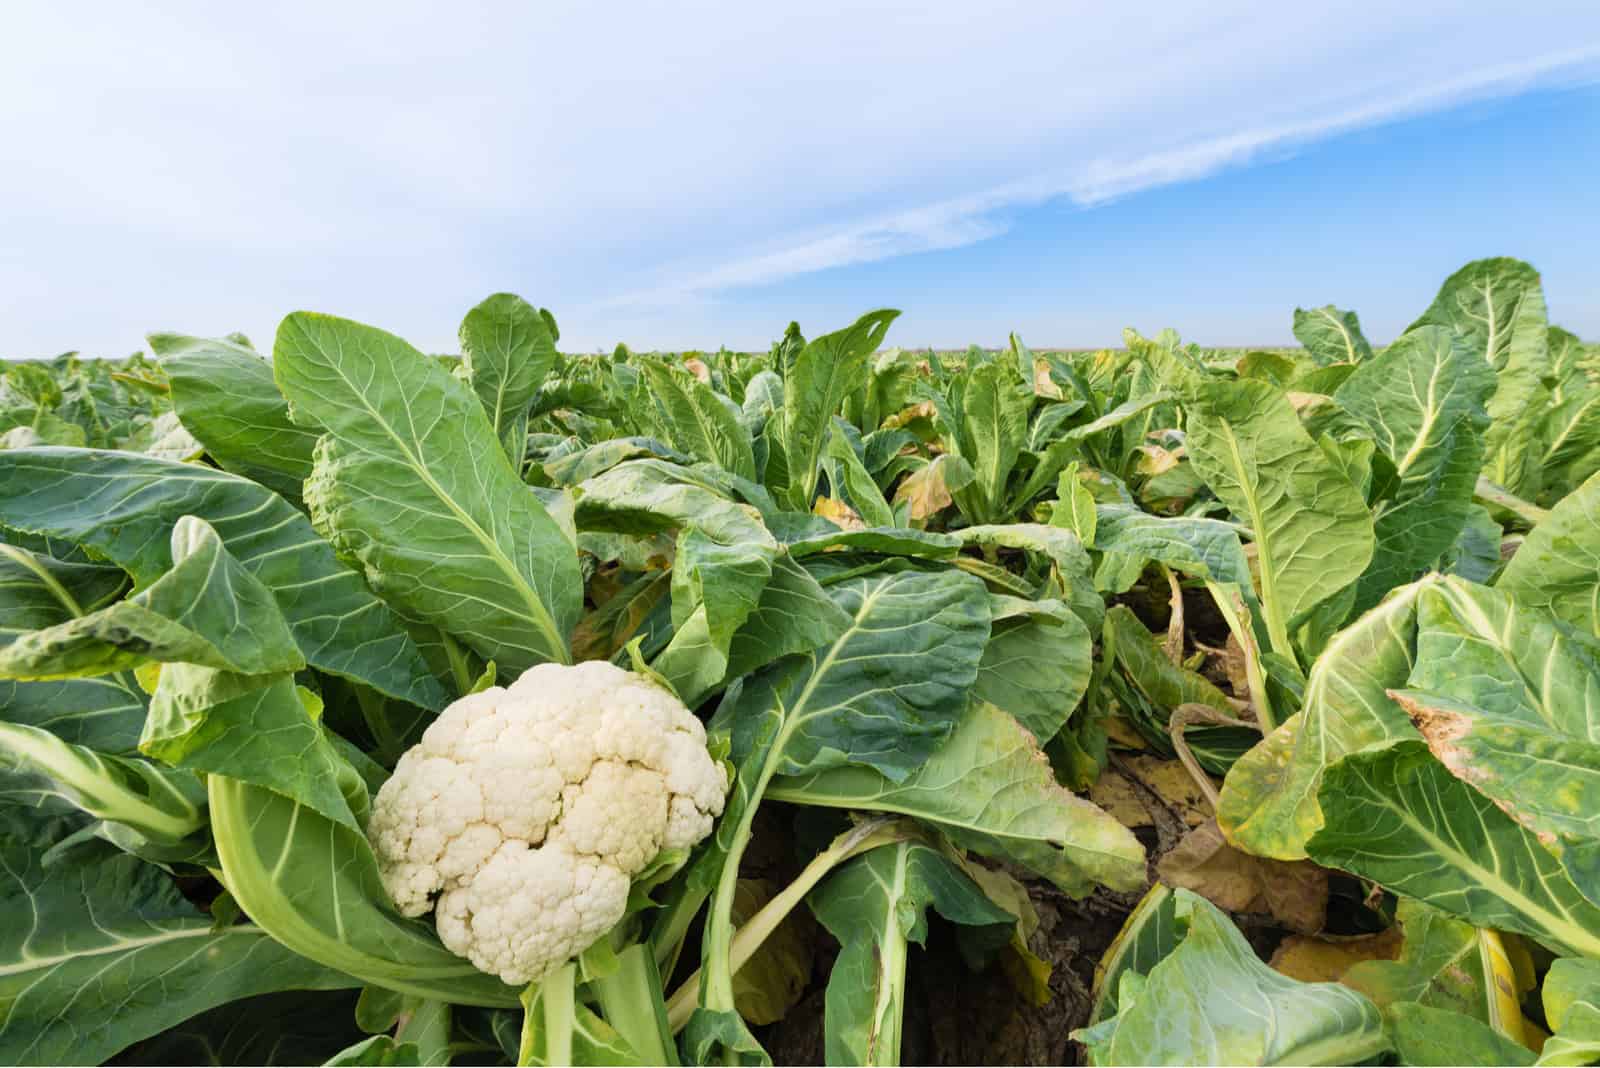 Cauliflower field under the blue sky